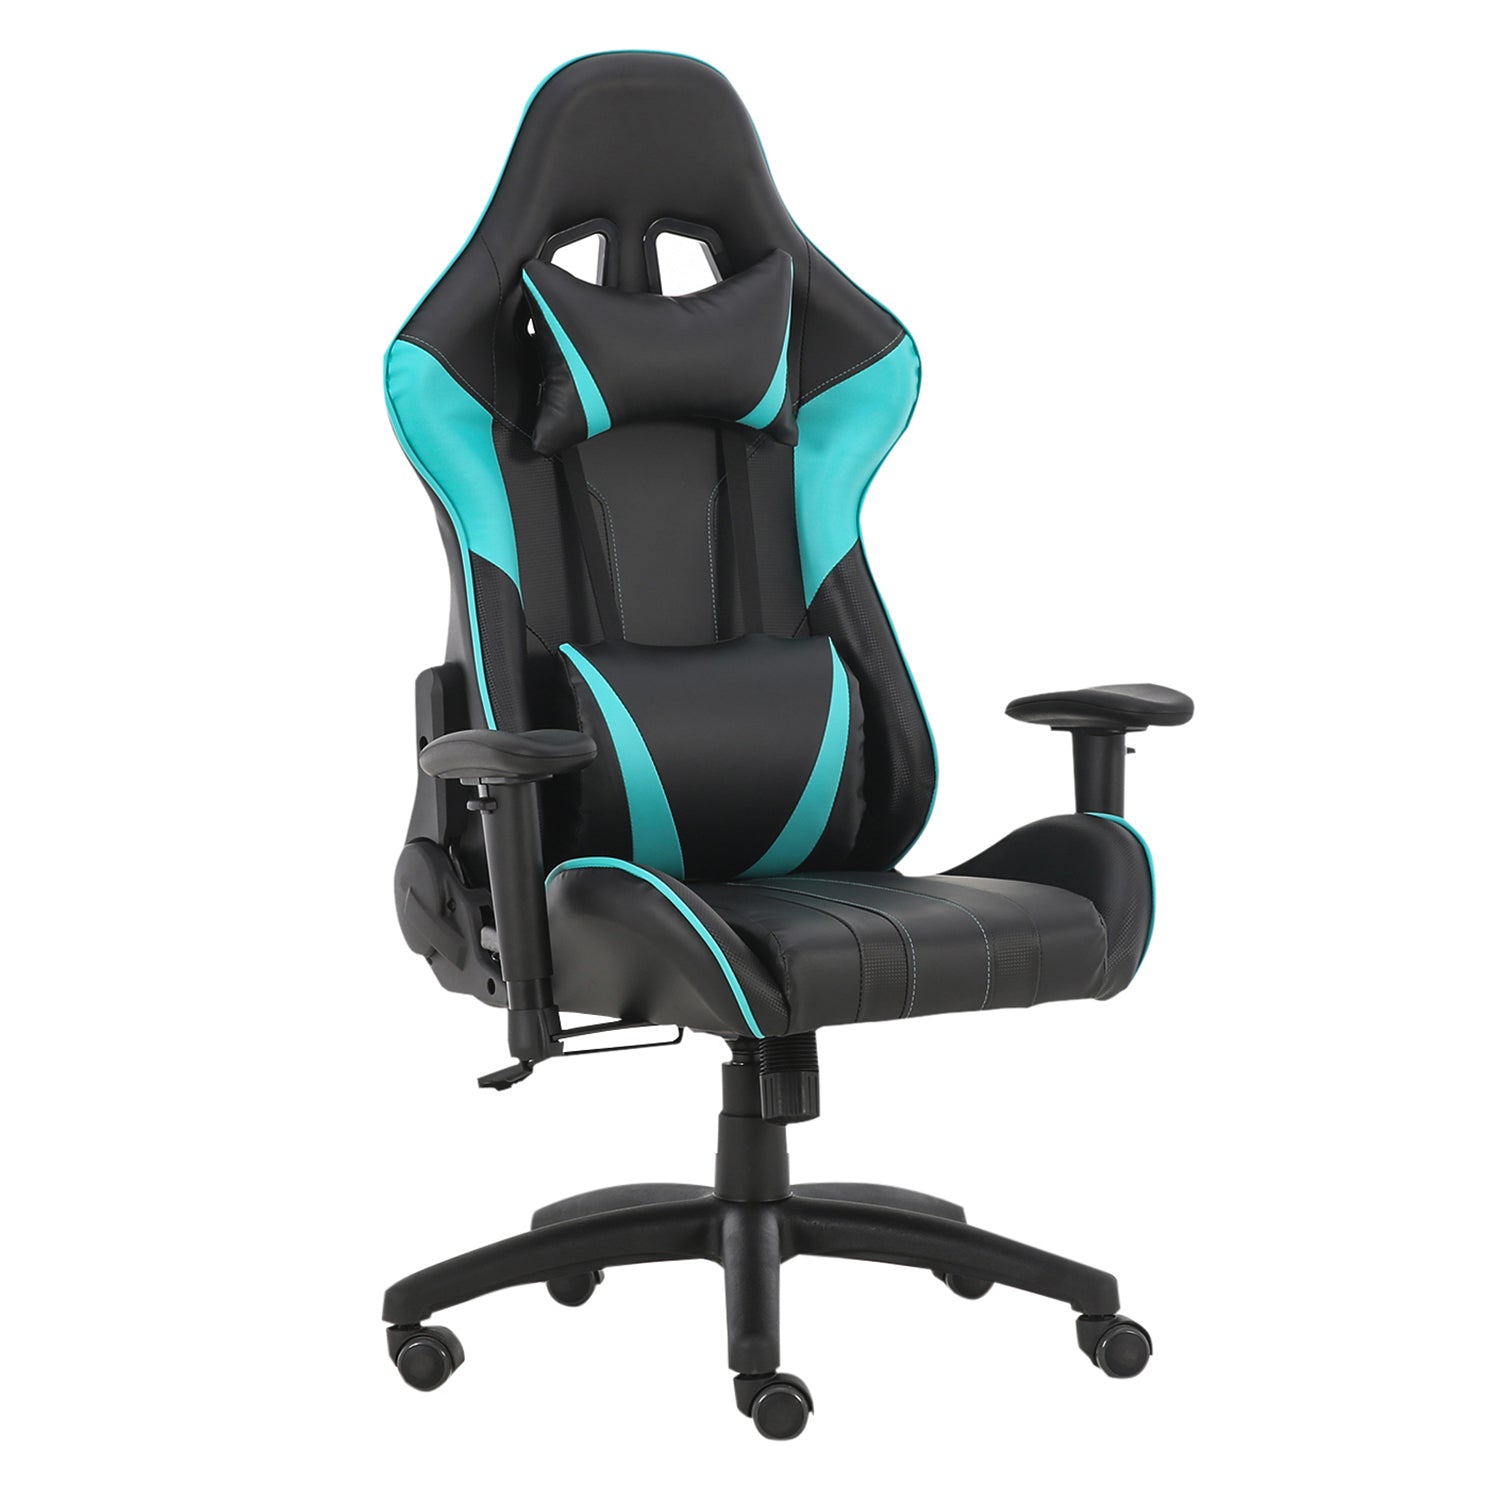 SUGIFT Game Chair, PU Office Swivel Chair, with Headrest and Lumbar Pillow, Light Blue